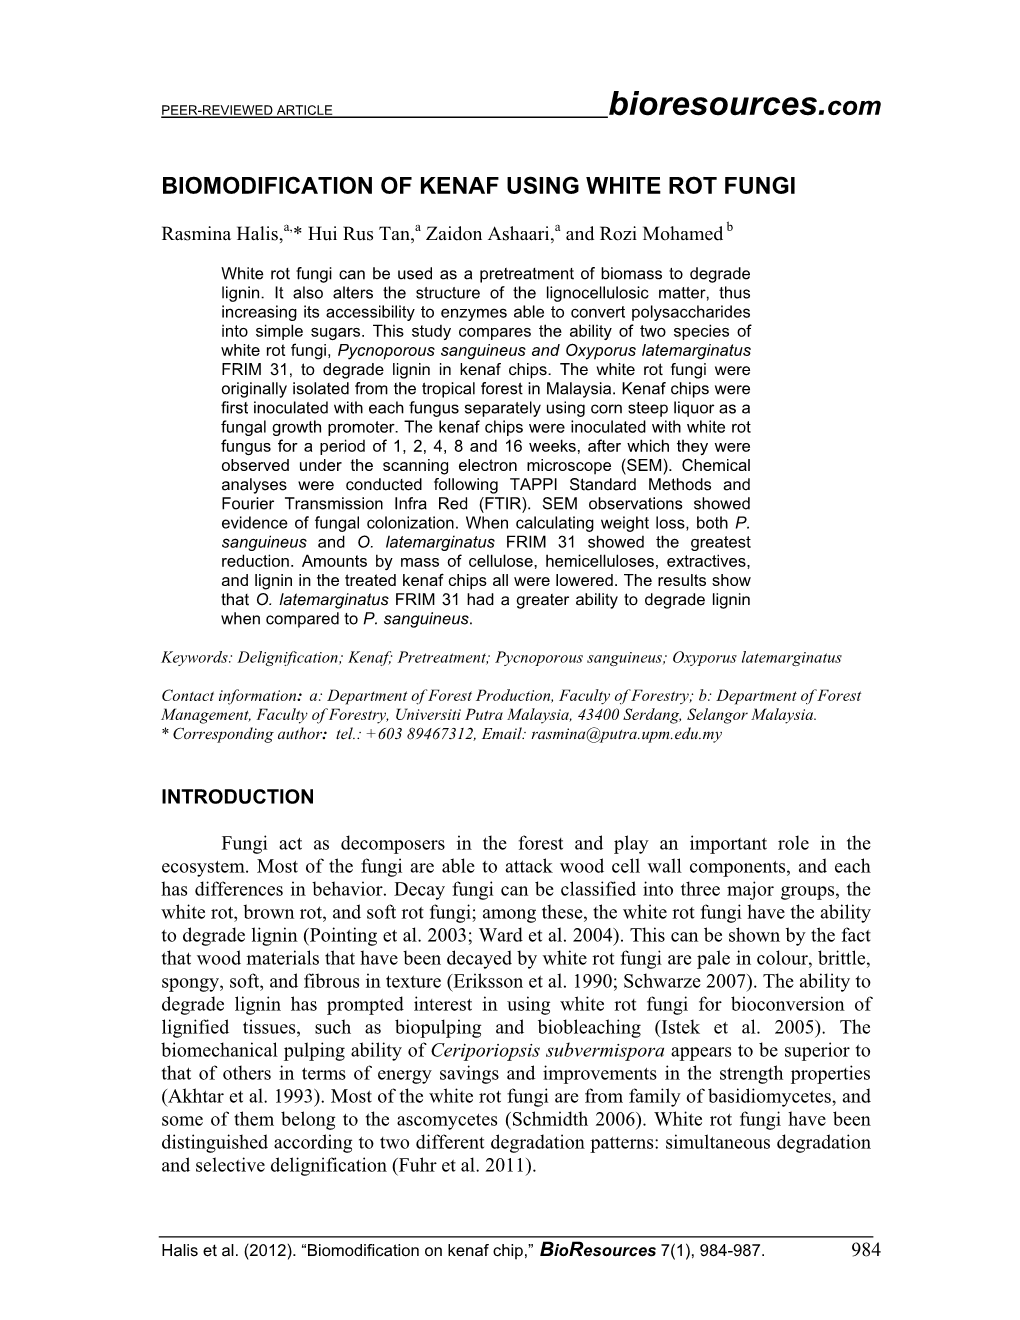 Biomodification of Kenaf Using White Rot Fungi